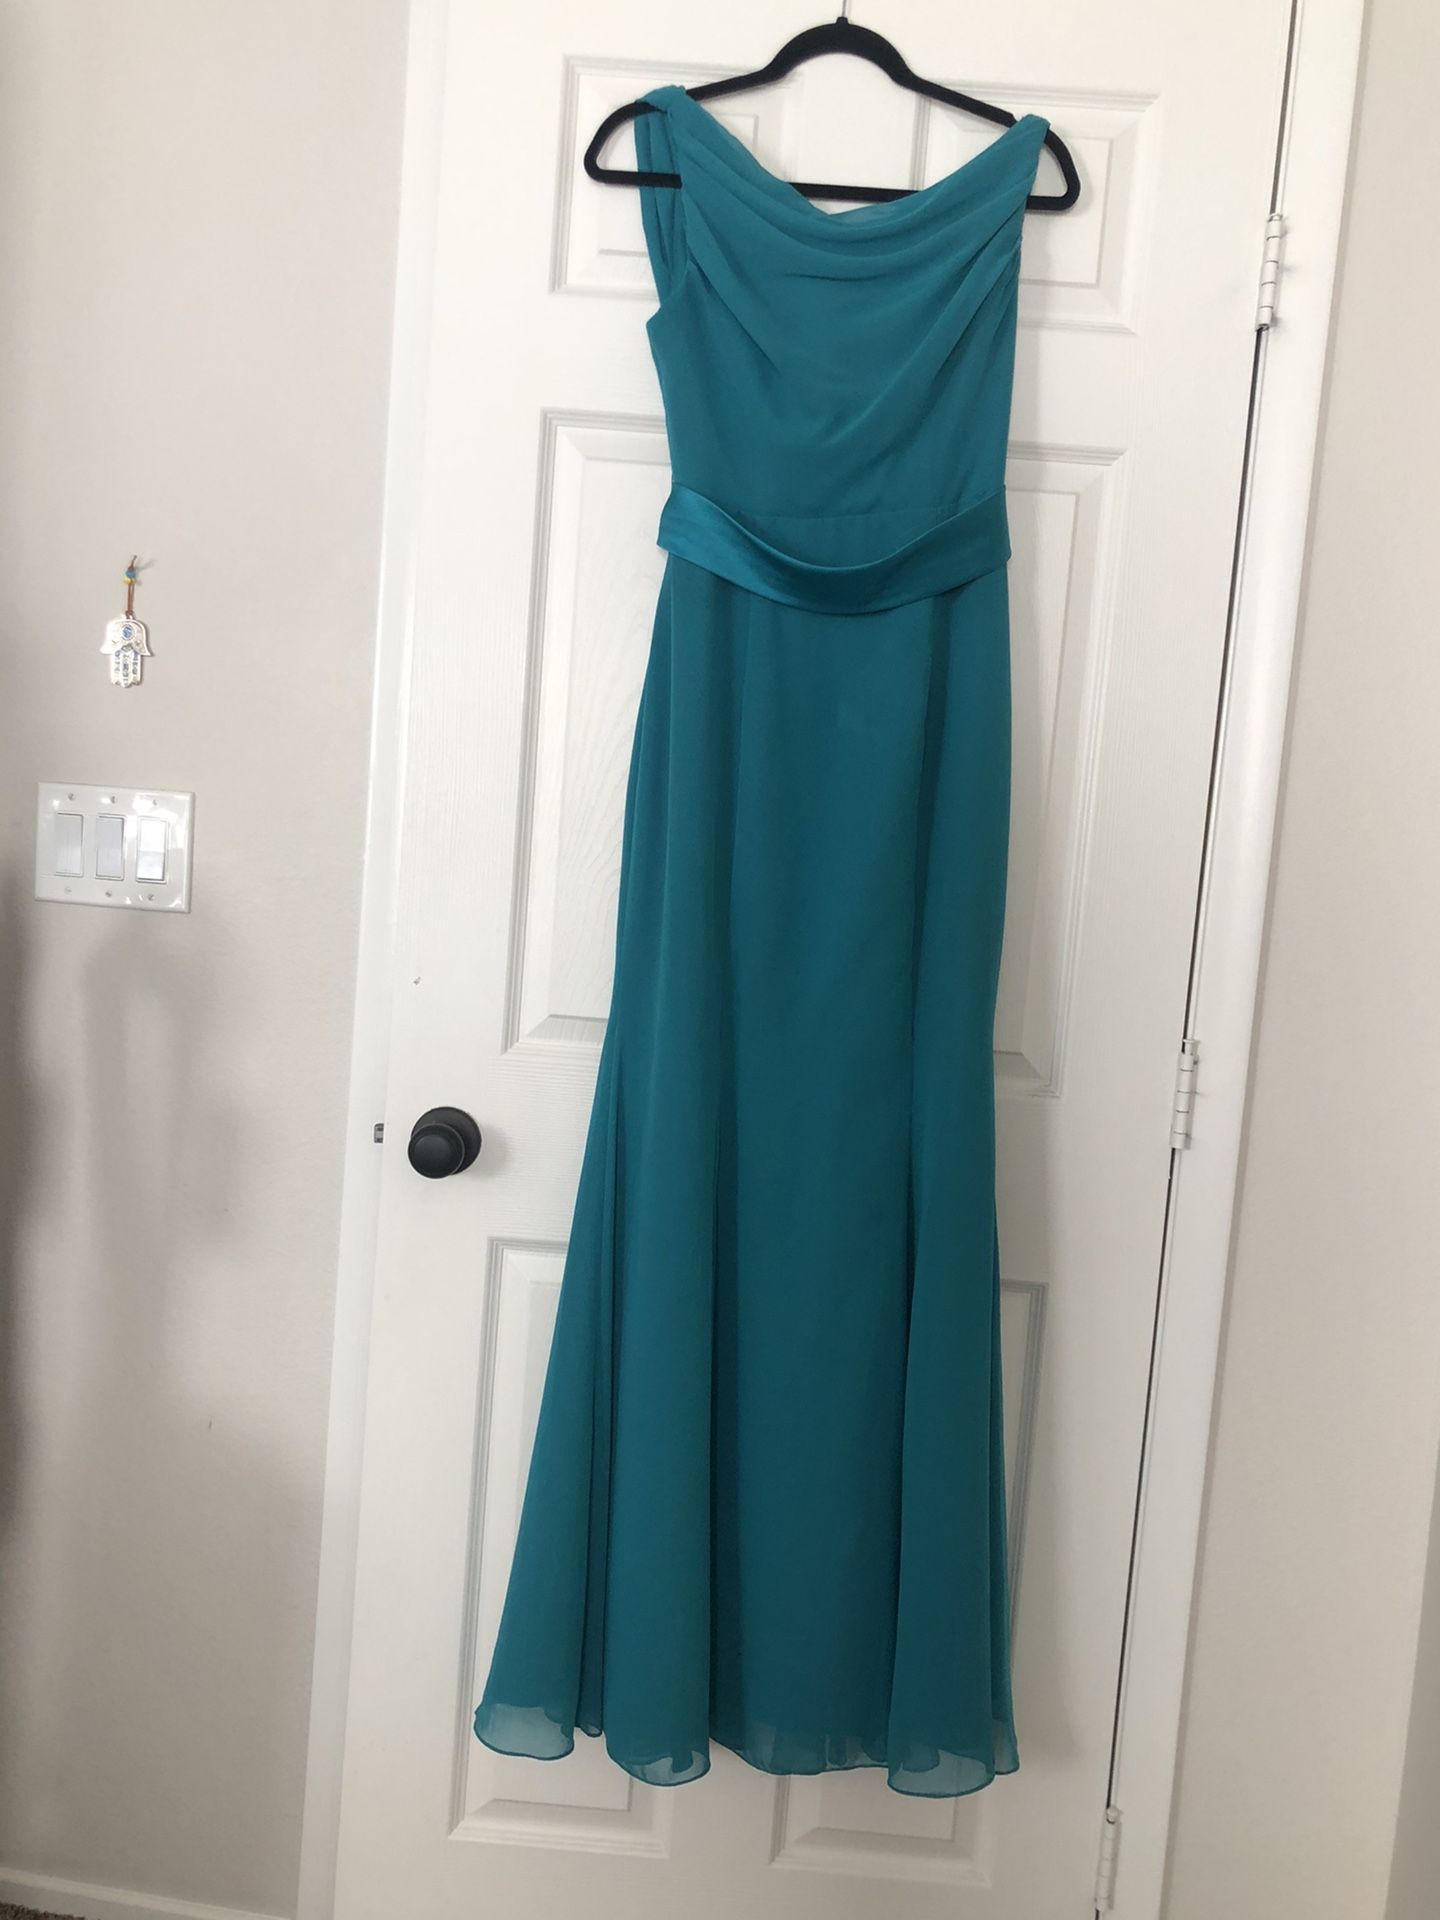 Teal Dress (size 8)